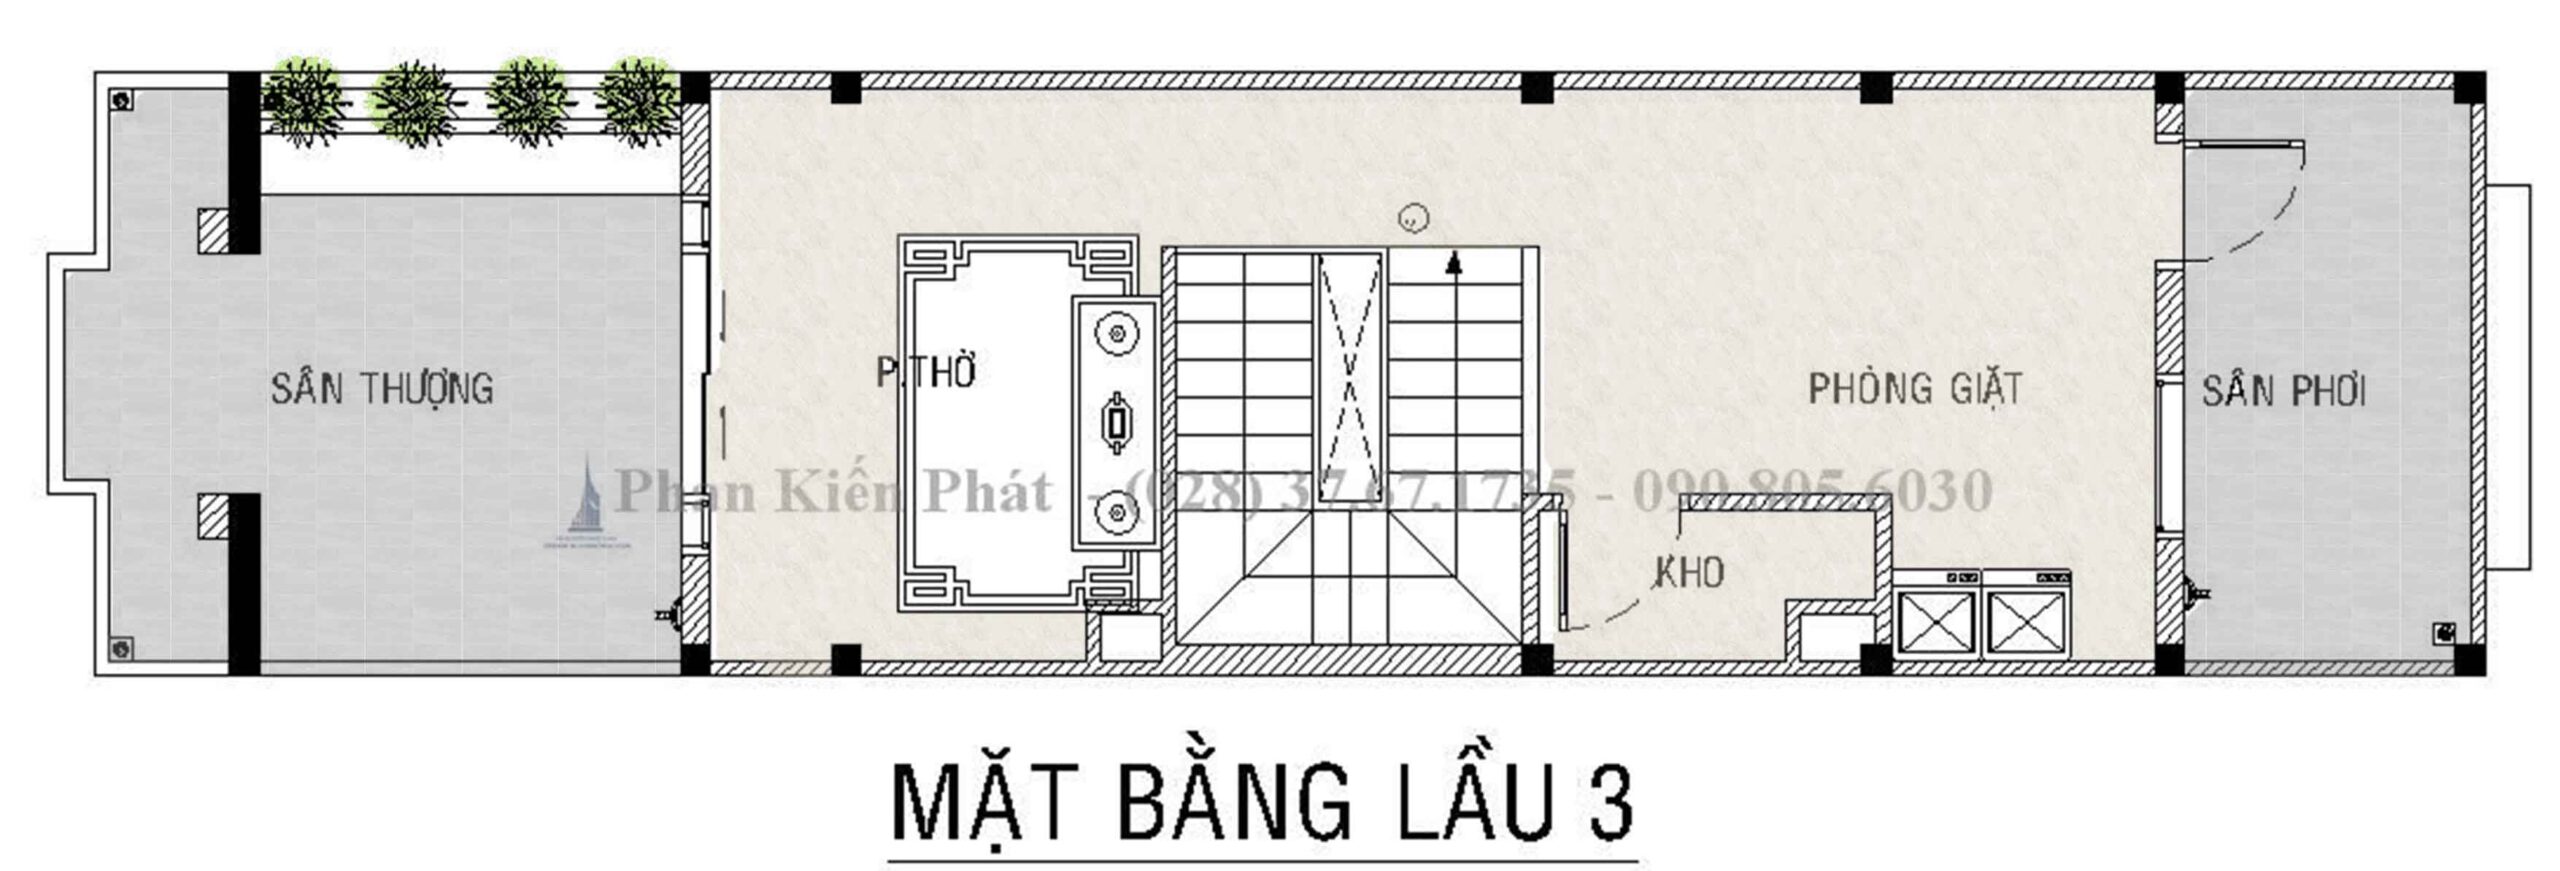 Mat Bang Lau 3 Nha Pho Co Dien Anh Tuan Tan Phu 1